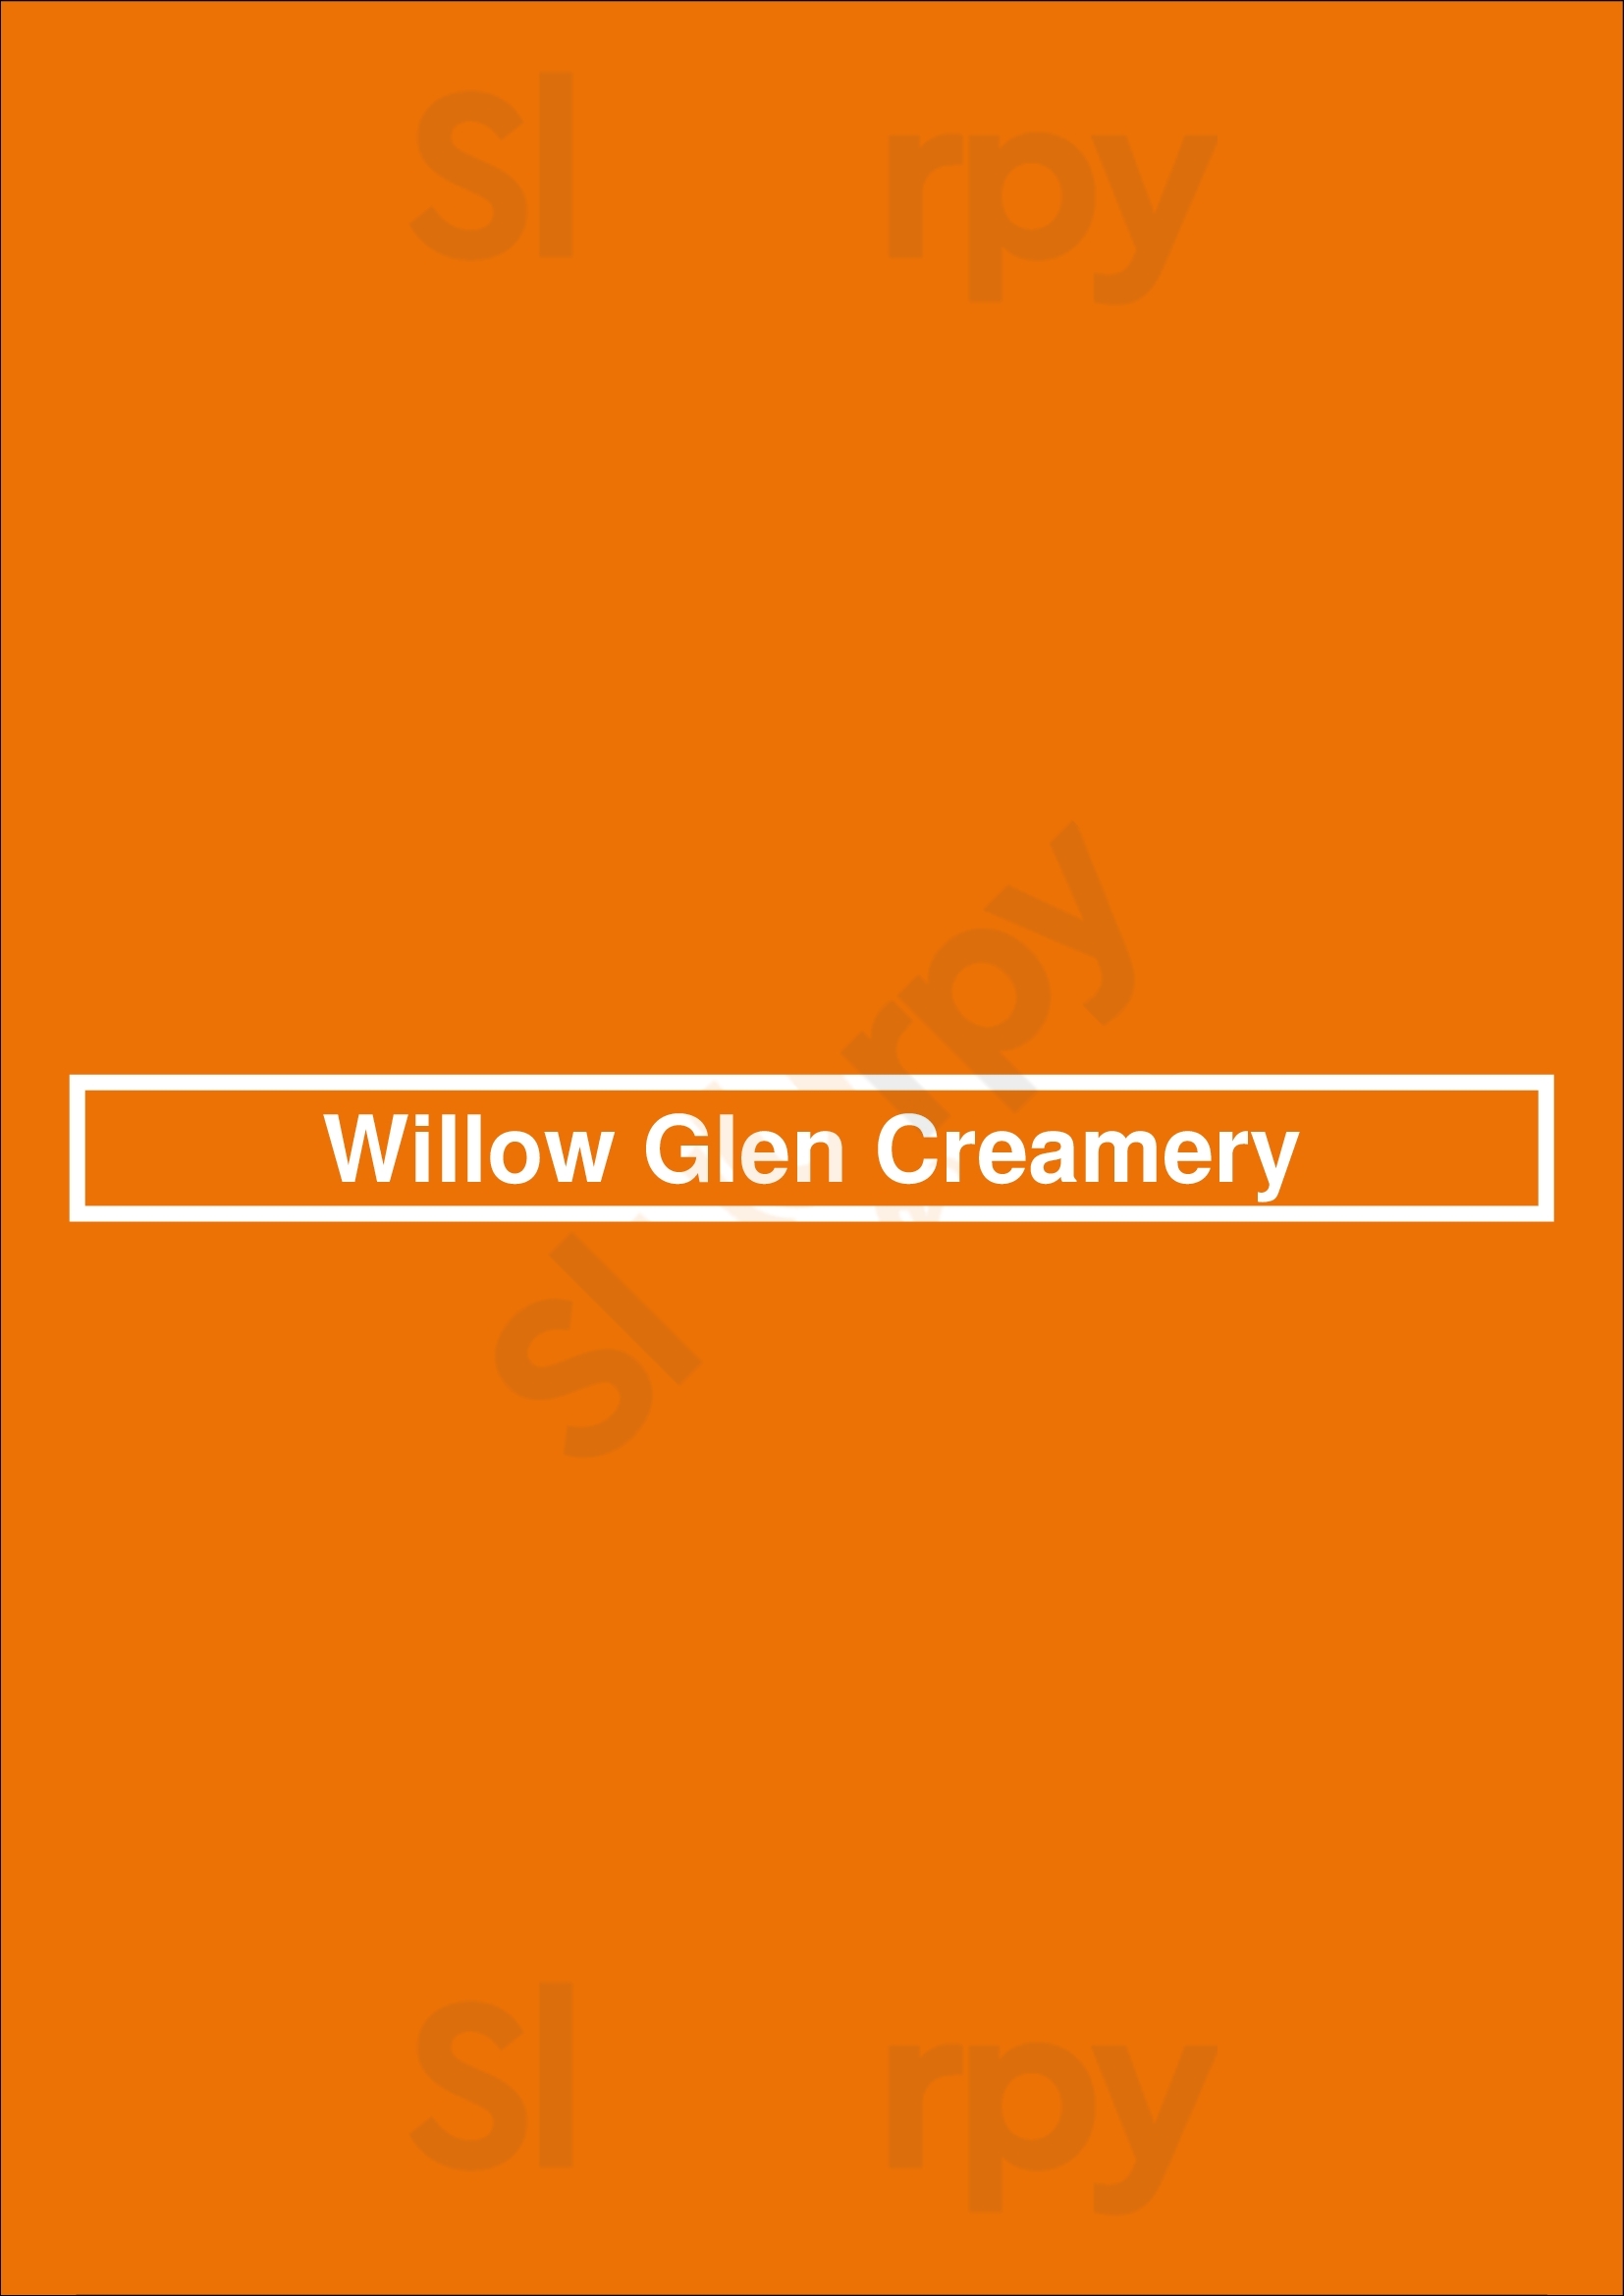 Willow Glen Creamery San Jose Menu - 1